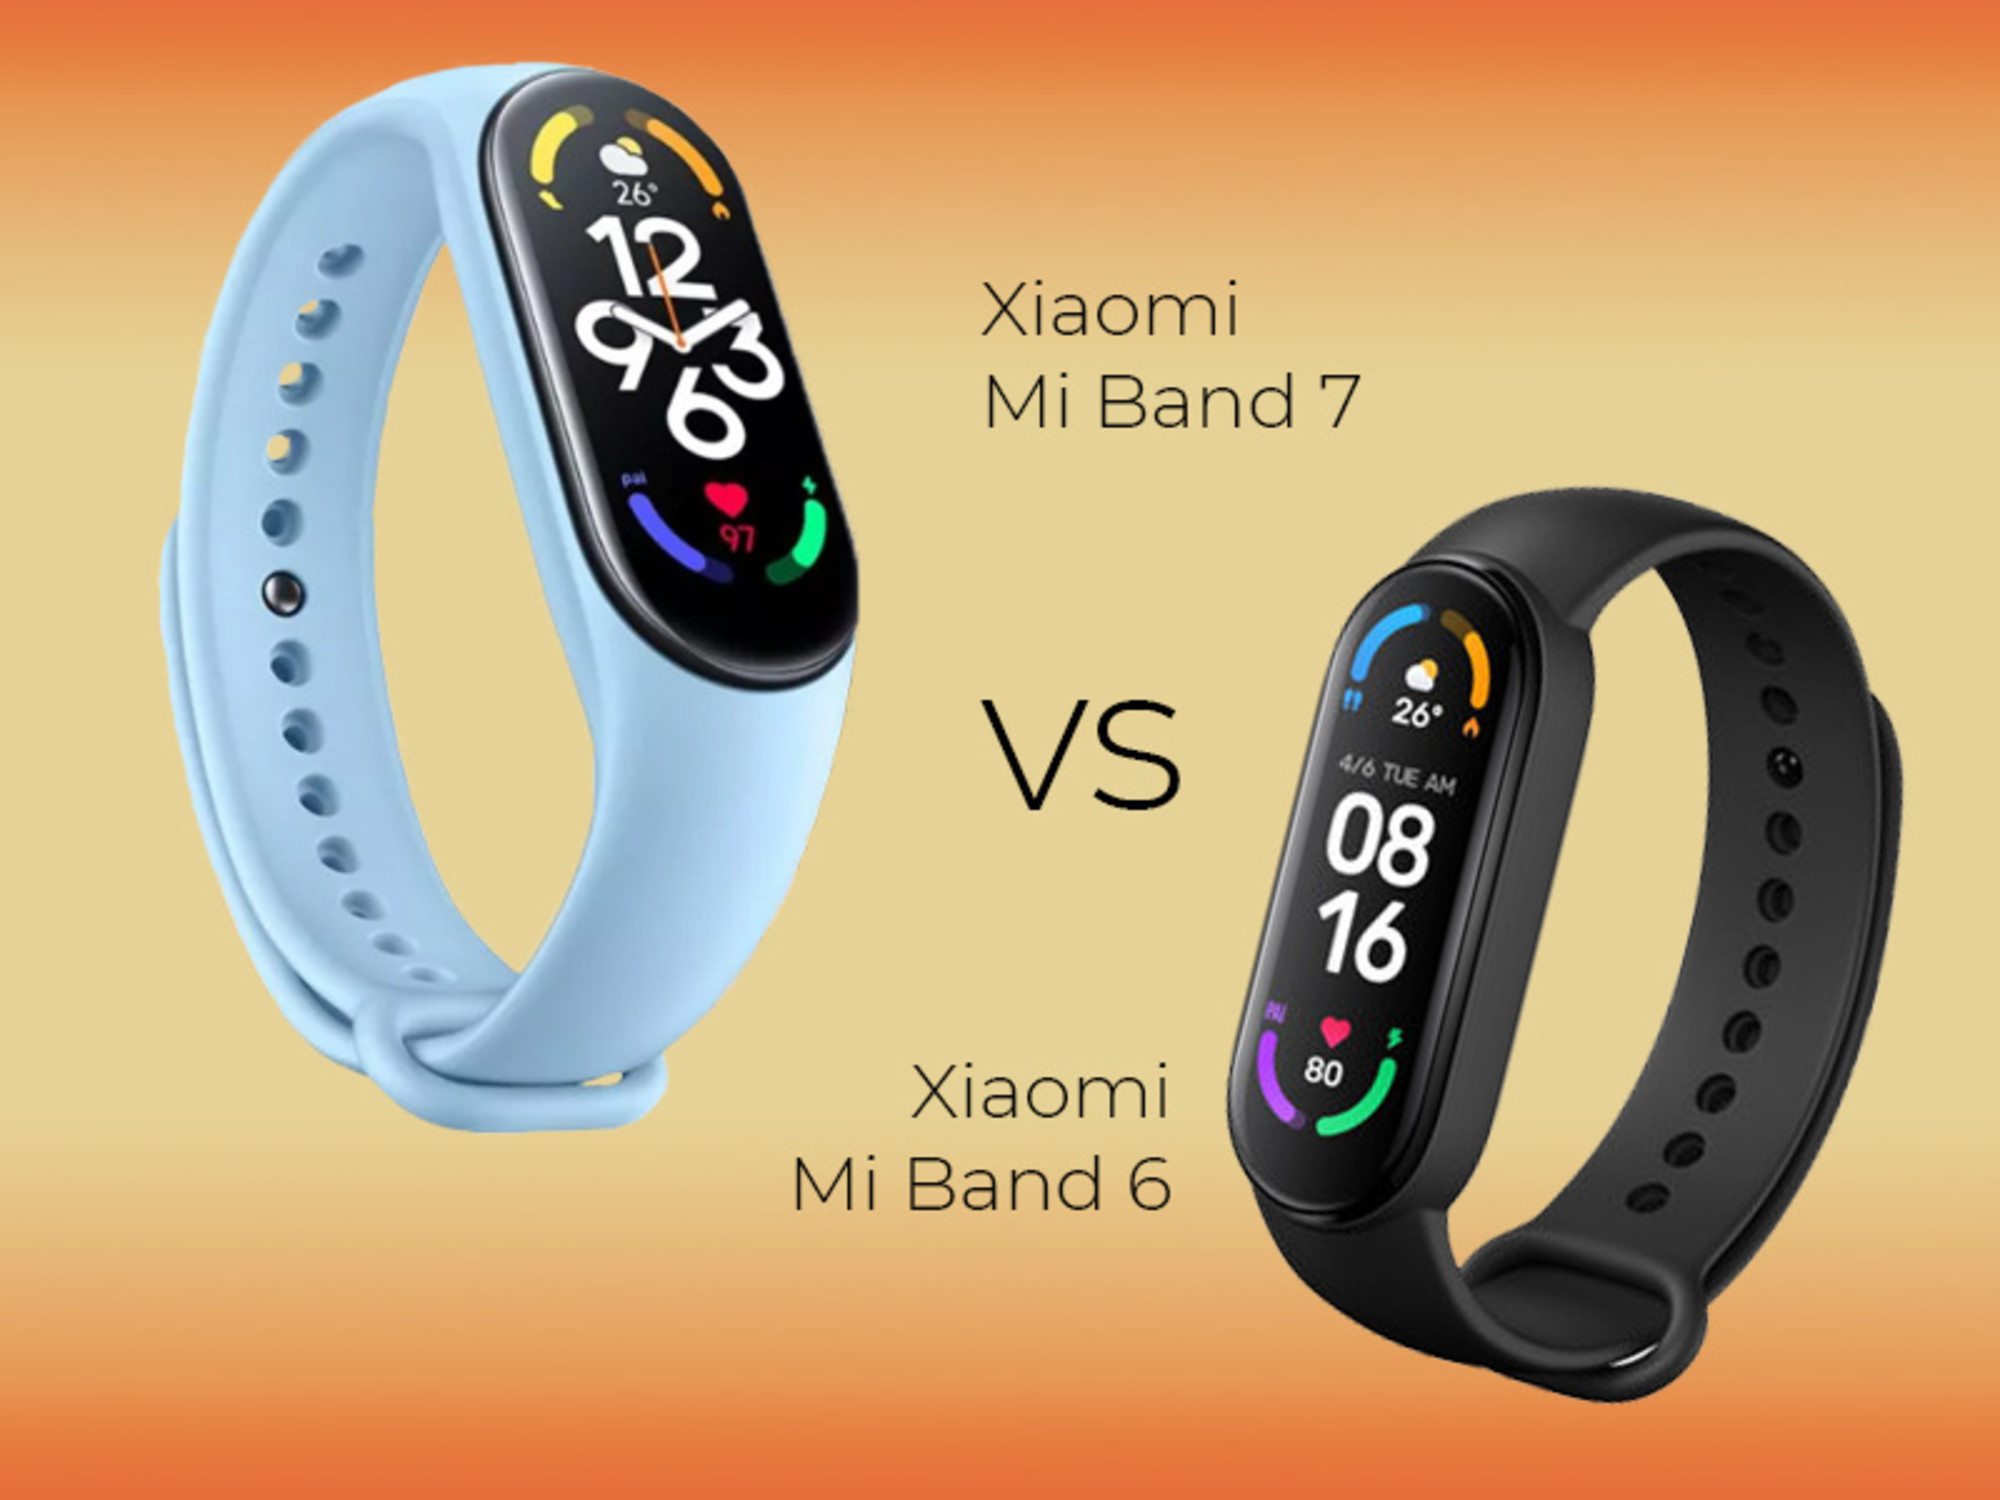 Xiaomi Mi Smart Band 6 Fitness Tracker - Global Version - Comprar